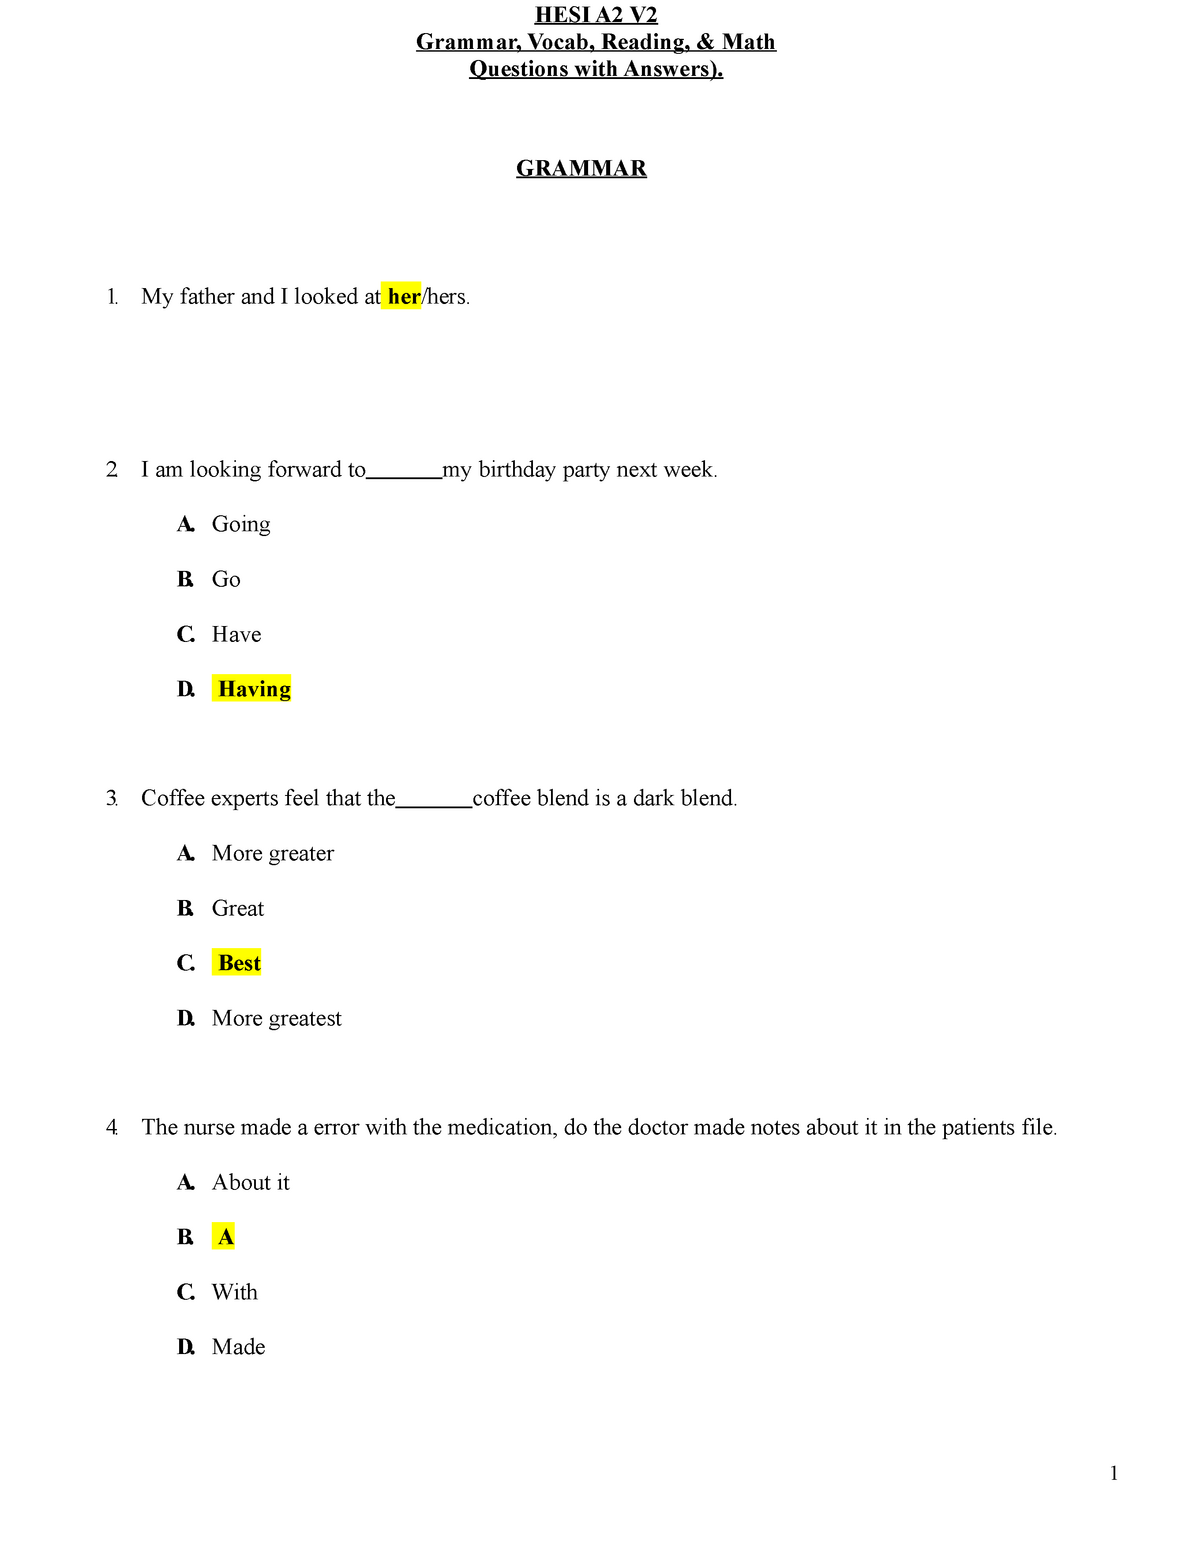 hesi-a2-version-2-grammar-vocab-reading-math-study-guide-pdf-1